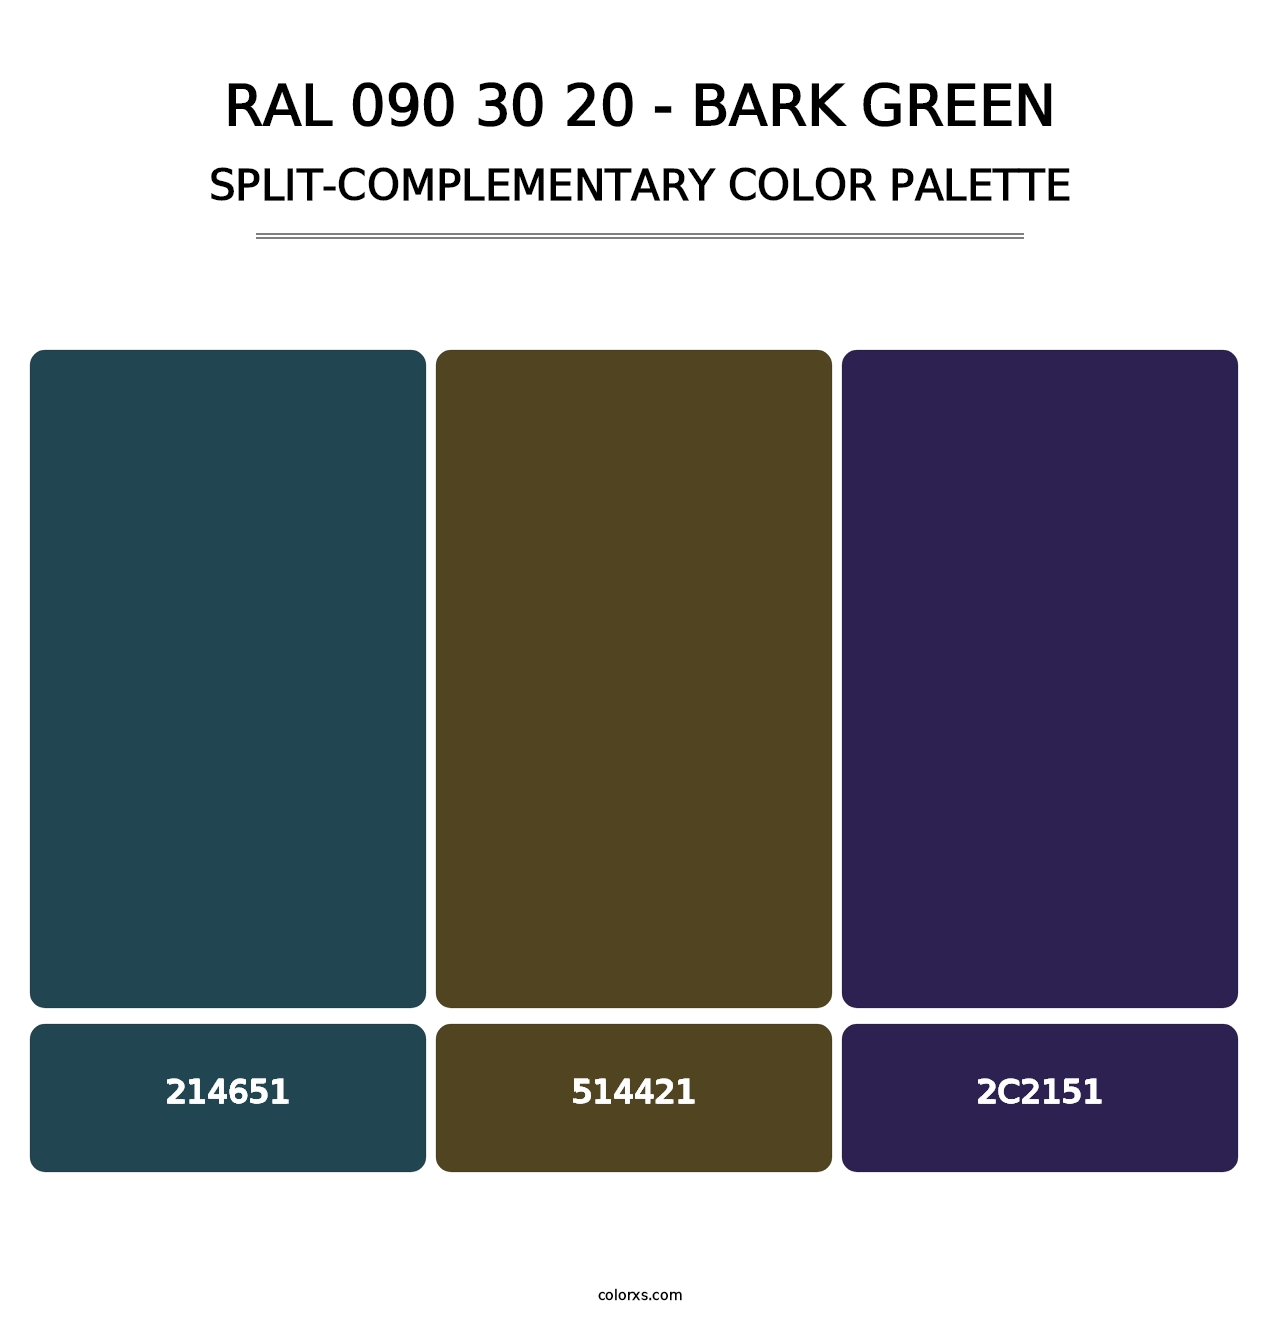 RAL 090 30 20 - Bark Green - Split-Complementary Color Palette